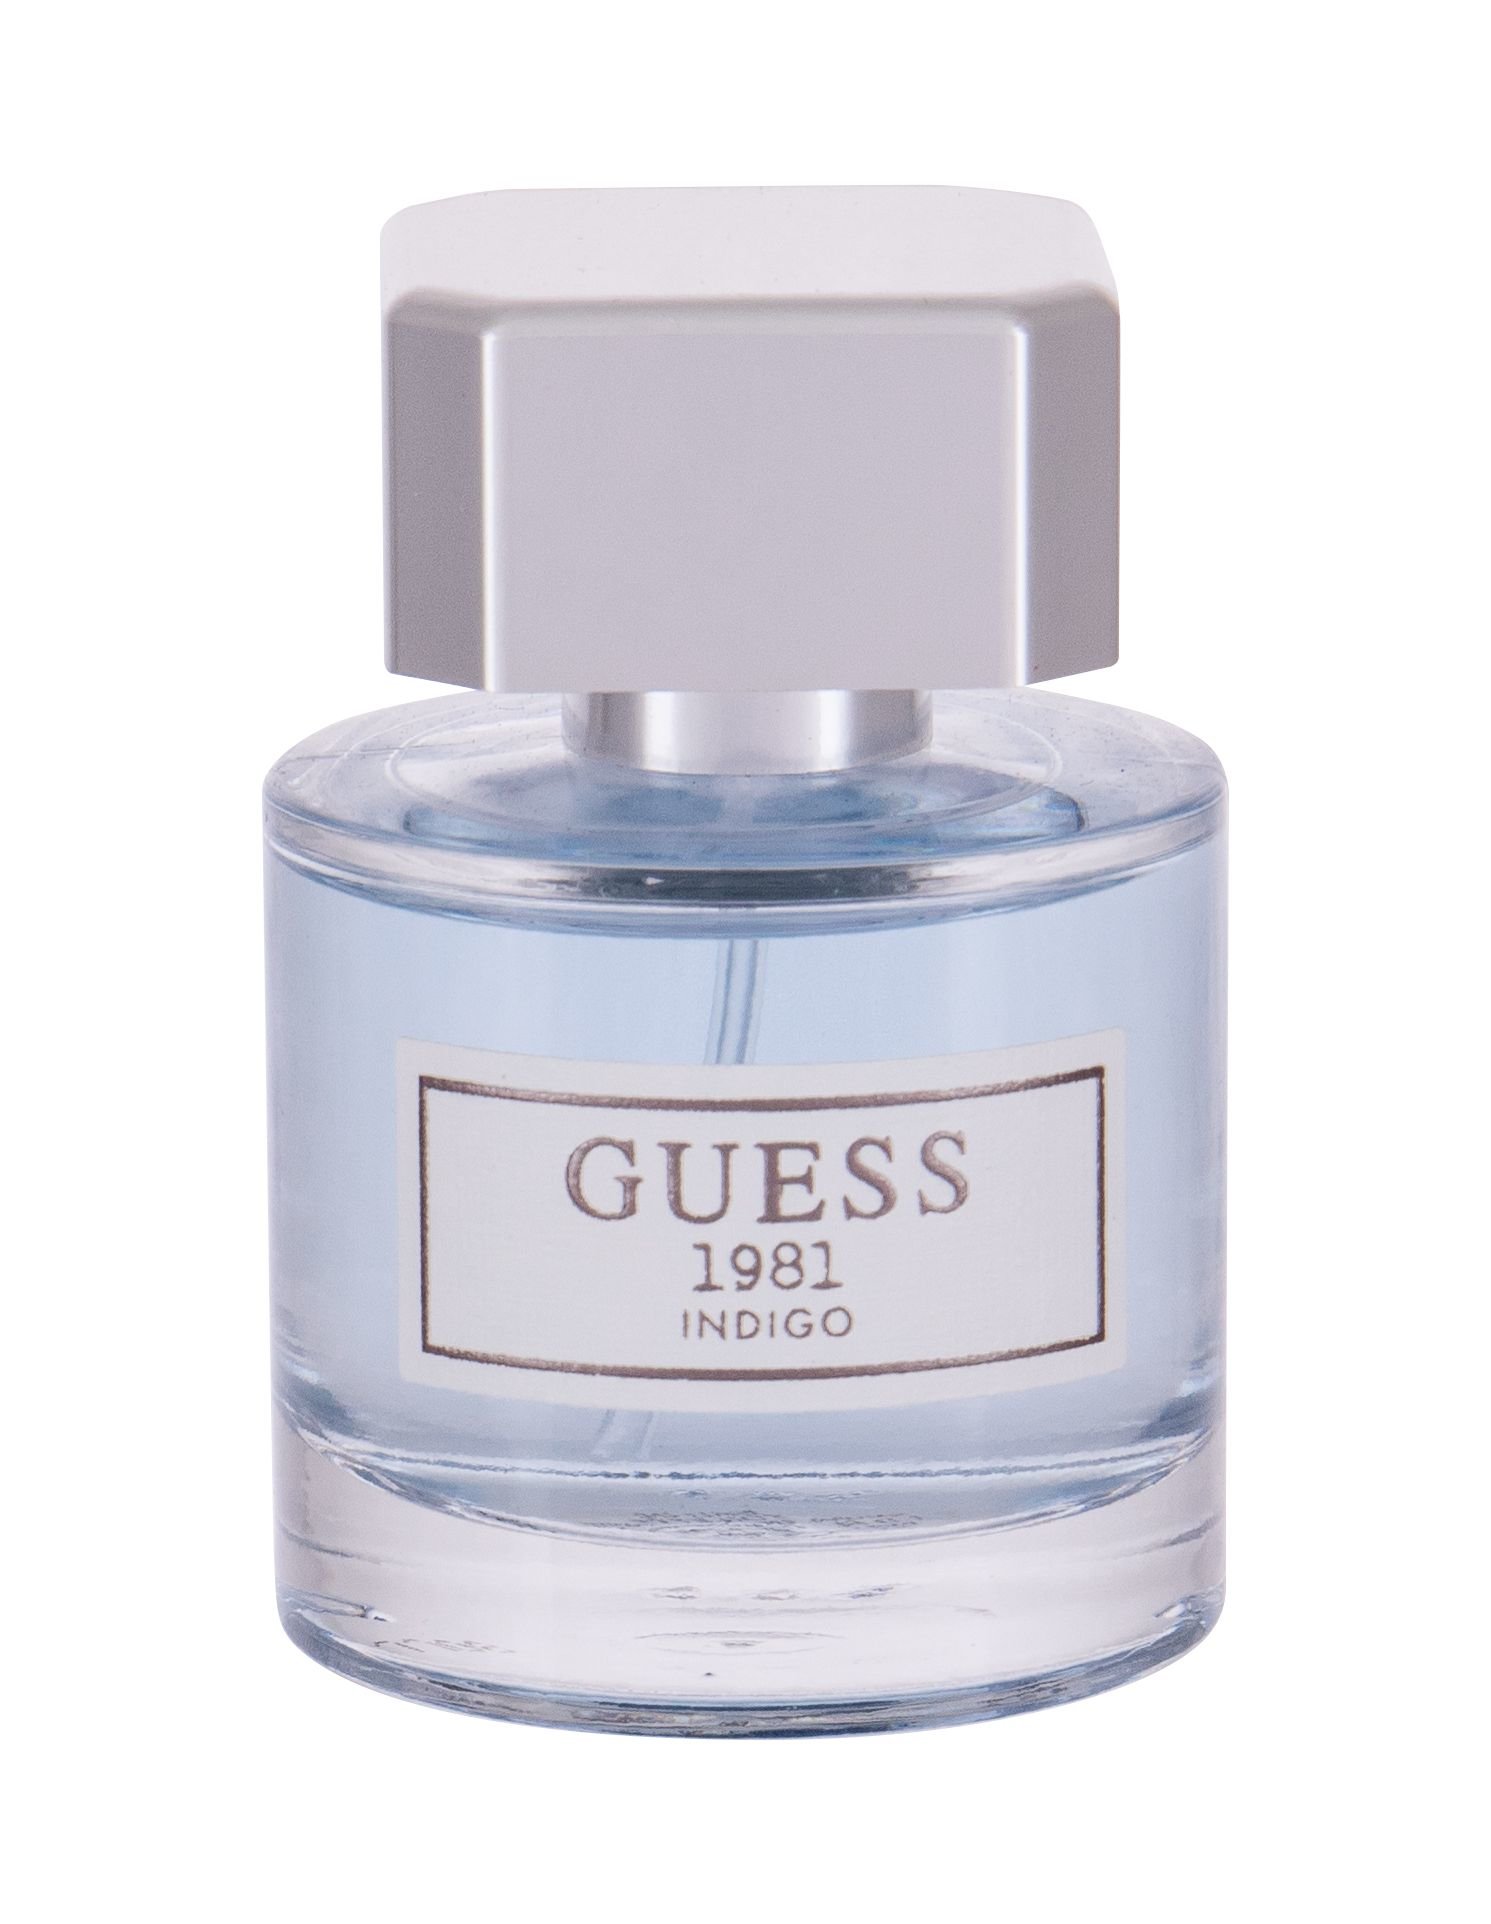 GUESS Guess 1981 Indigo, vzorka vône